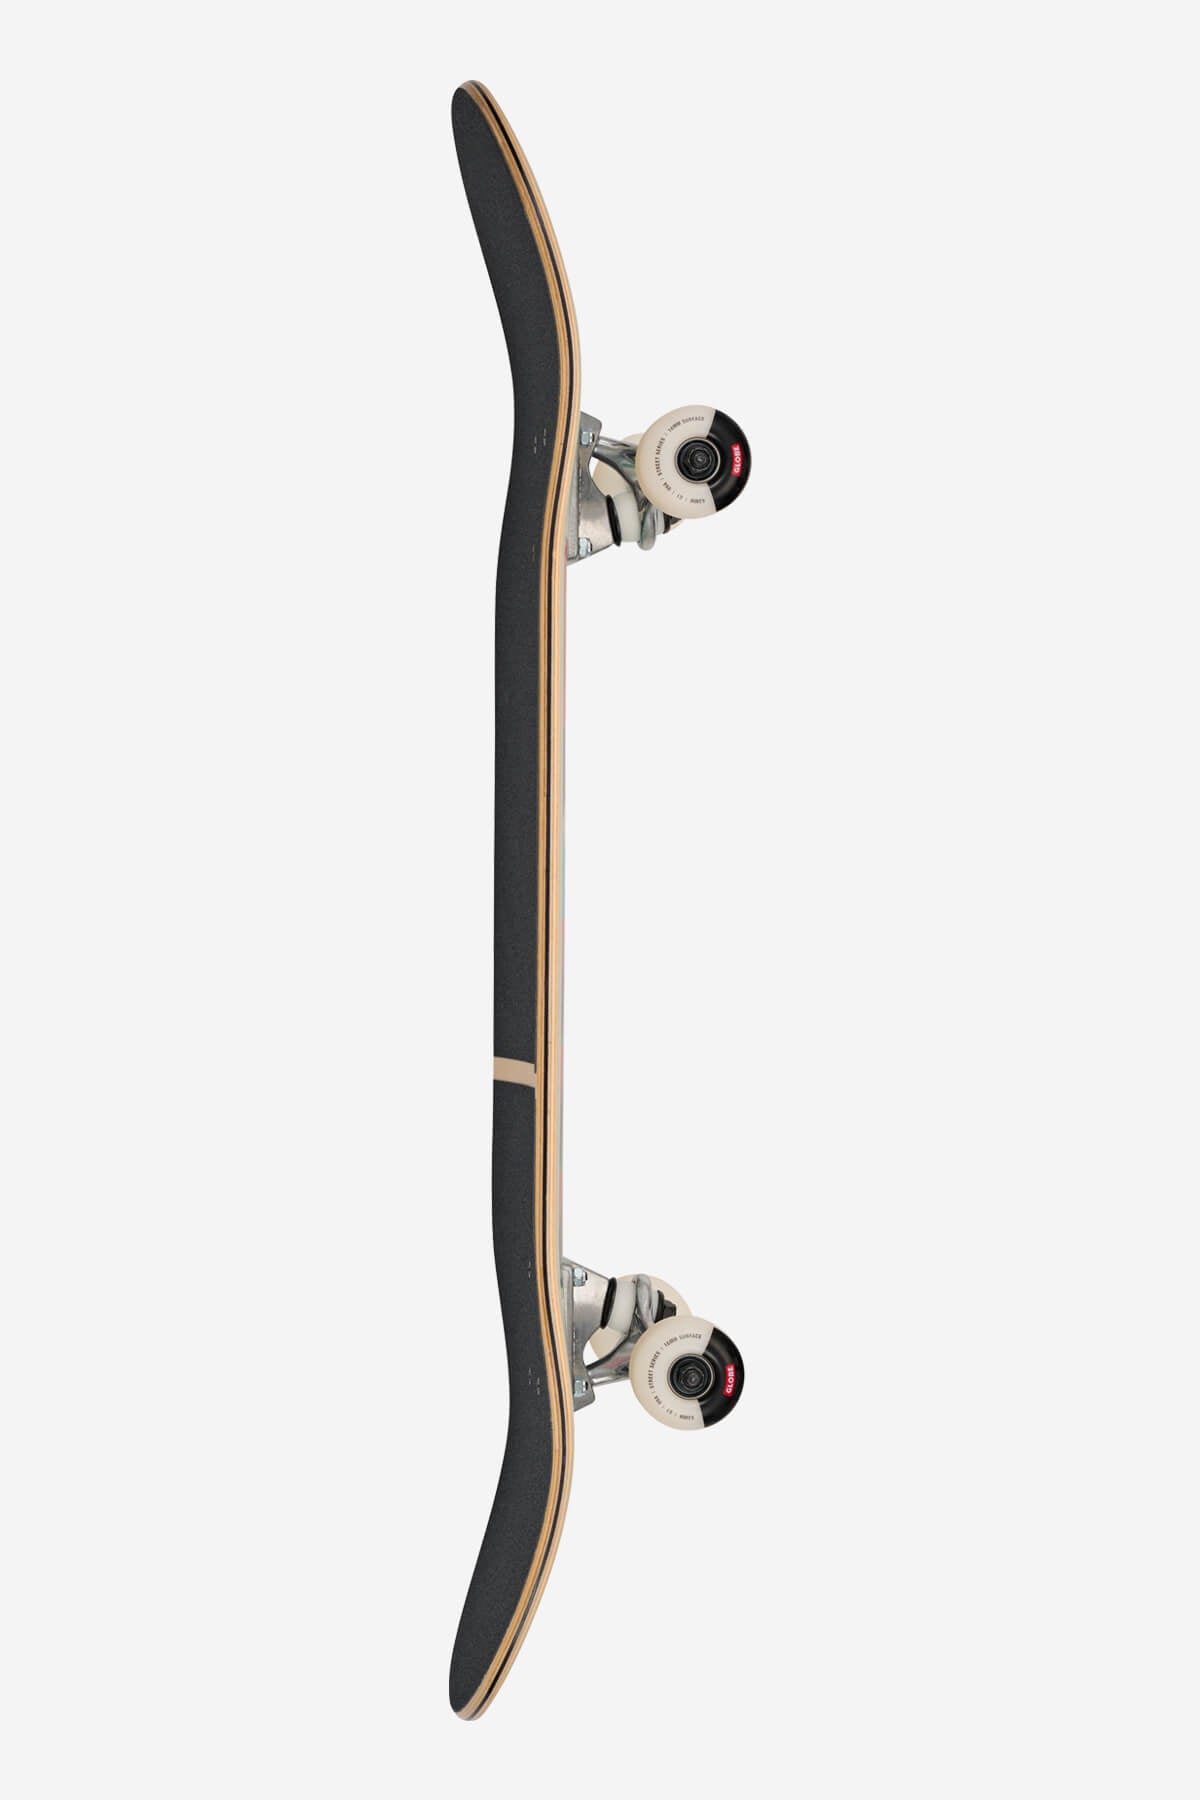 Globe - G1 Dessau - Afdaling - 8.0" Compleet Skateboard